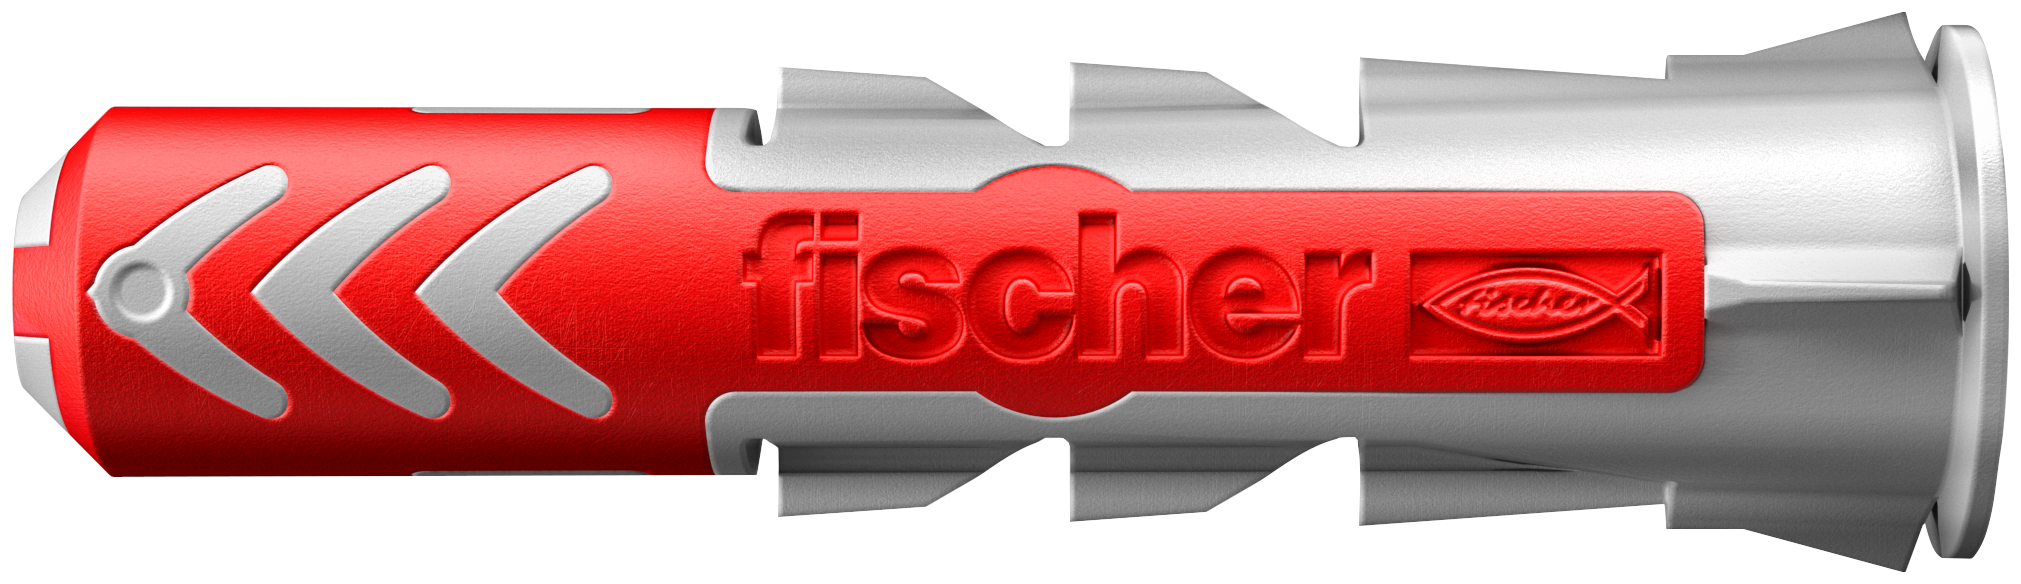 fischer Big Pack Tasselli DUOPOWER 8 (120 Tasselli) (120 Pz.) Busta di tasselli formato convenienza.